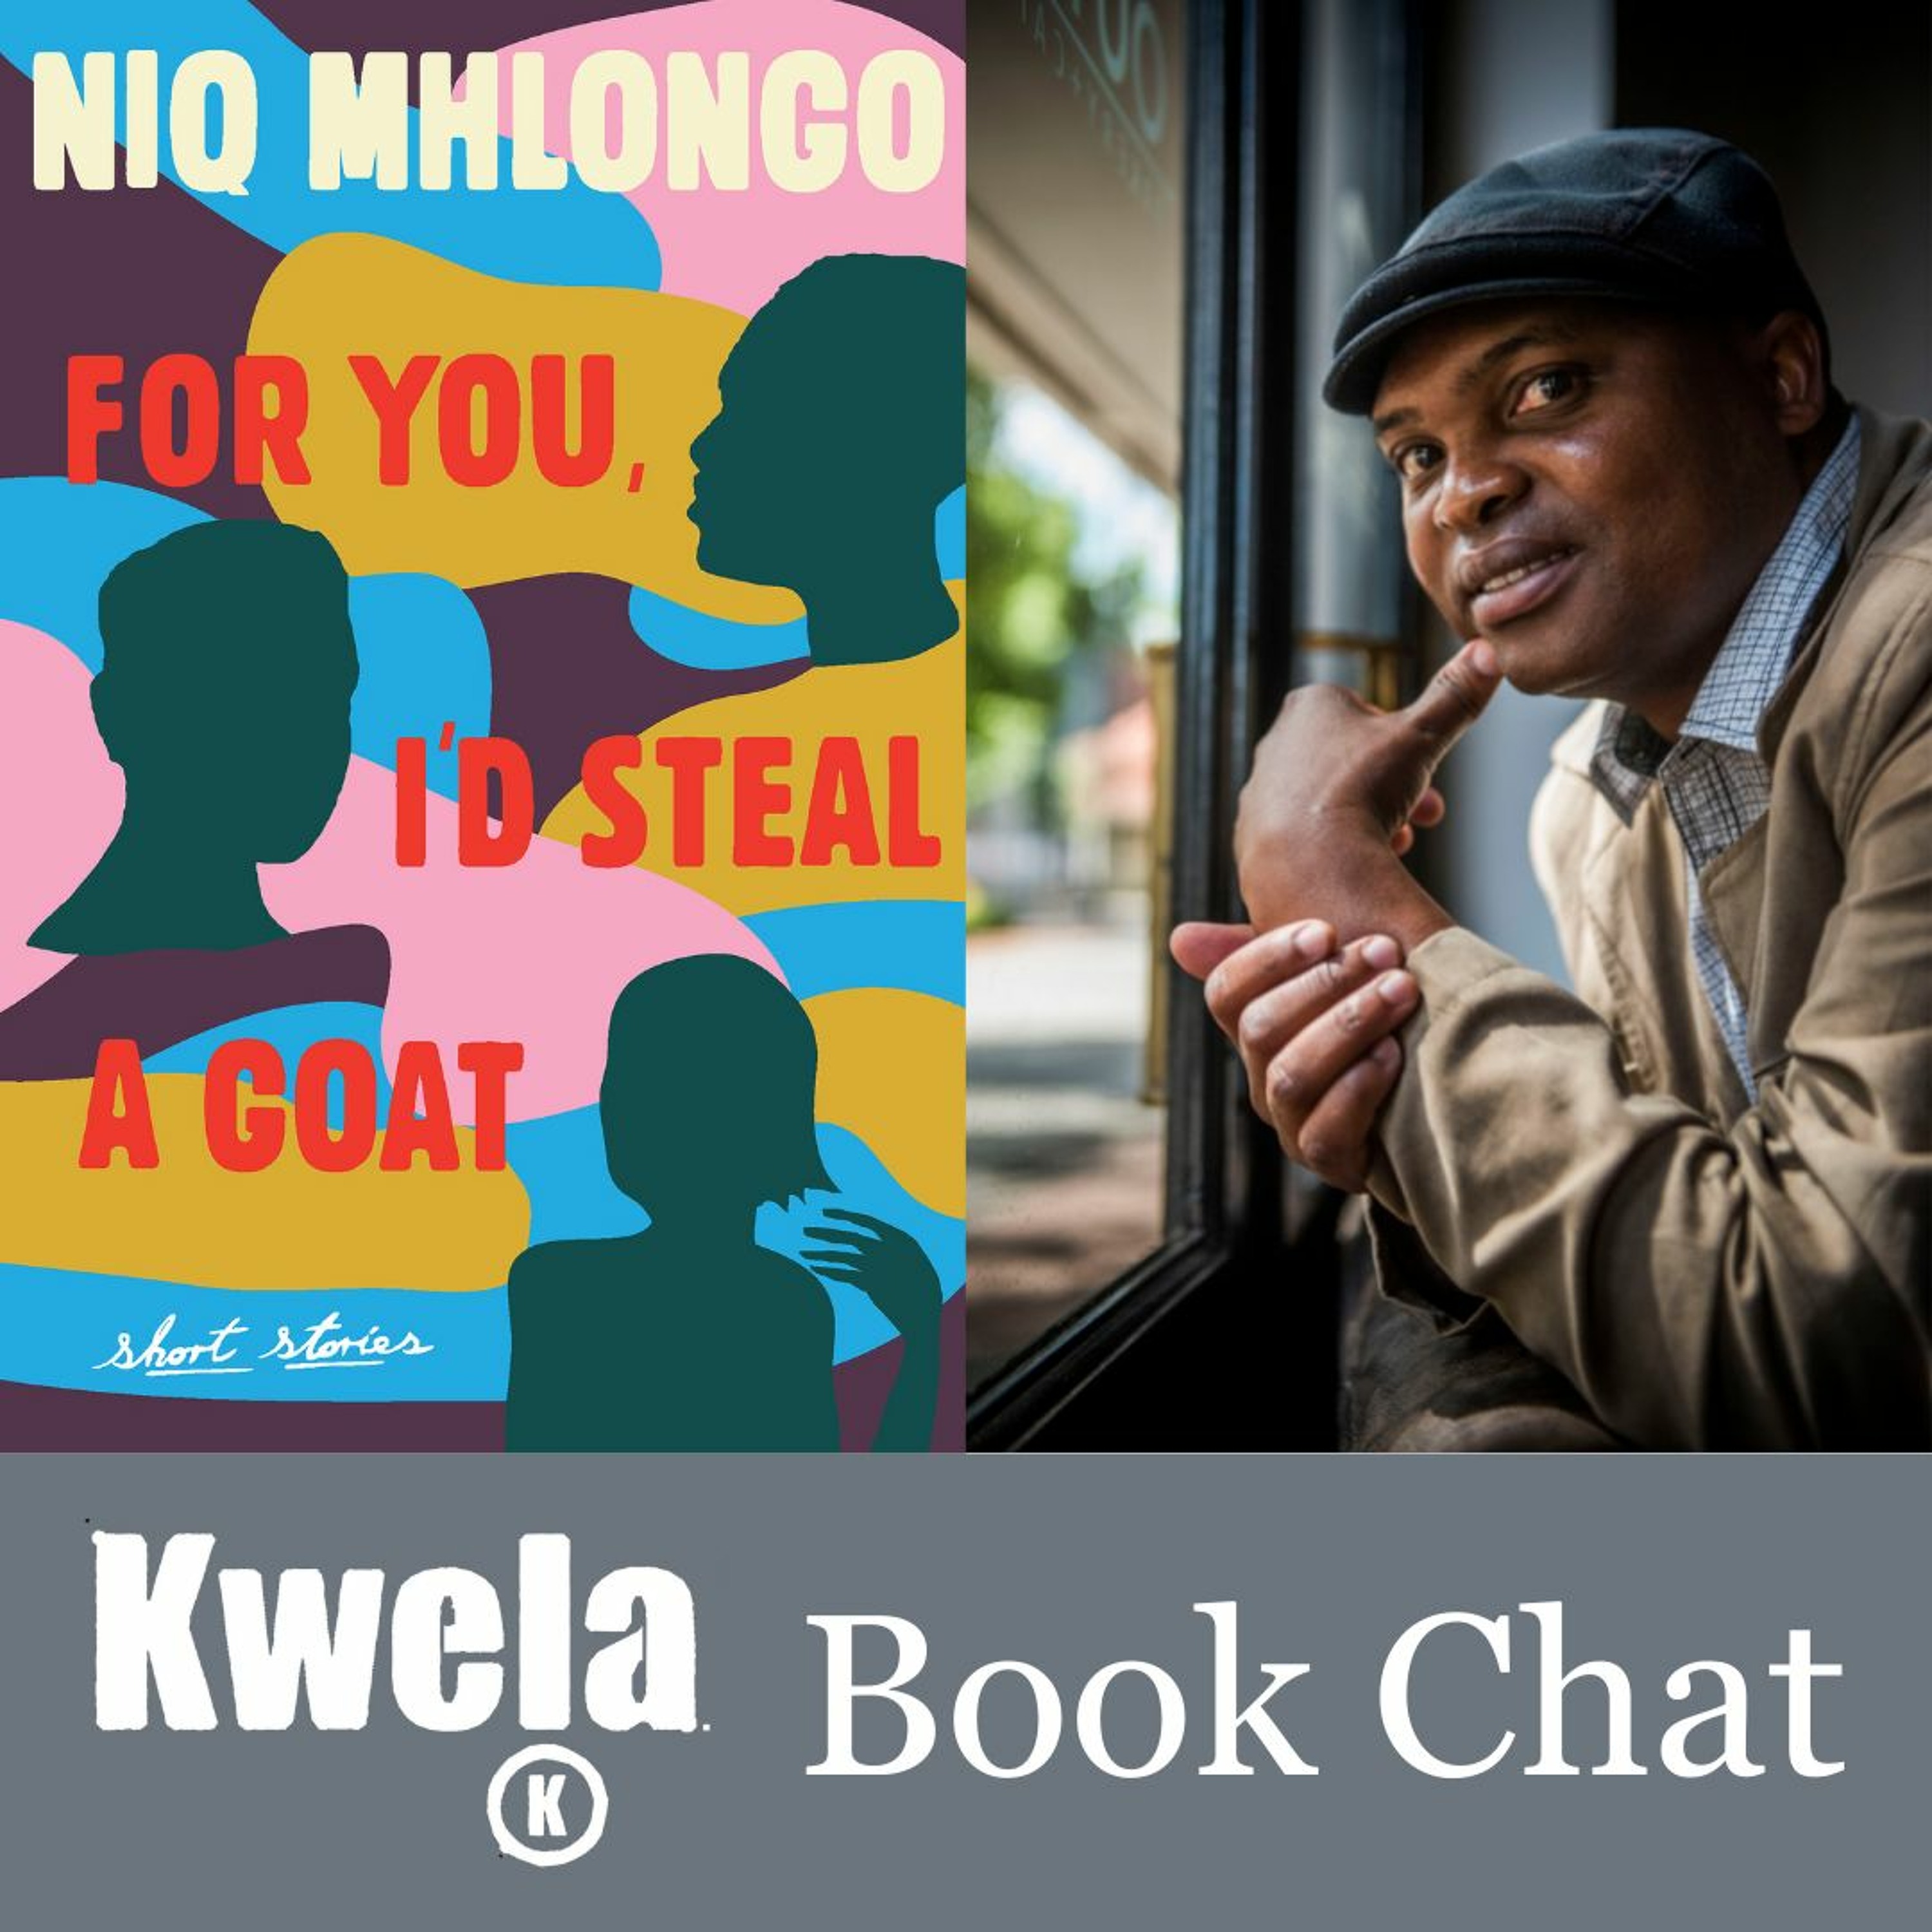 Kwela Book Chat: For You, I’d Steal a Goat by Niq Mhlongo with Sara-Jayne Makwala King